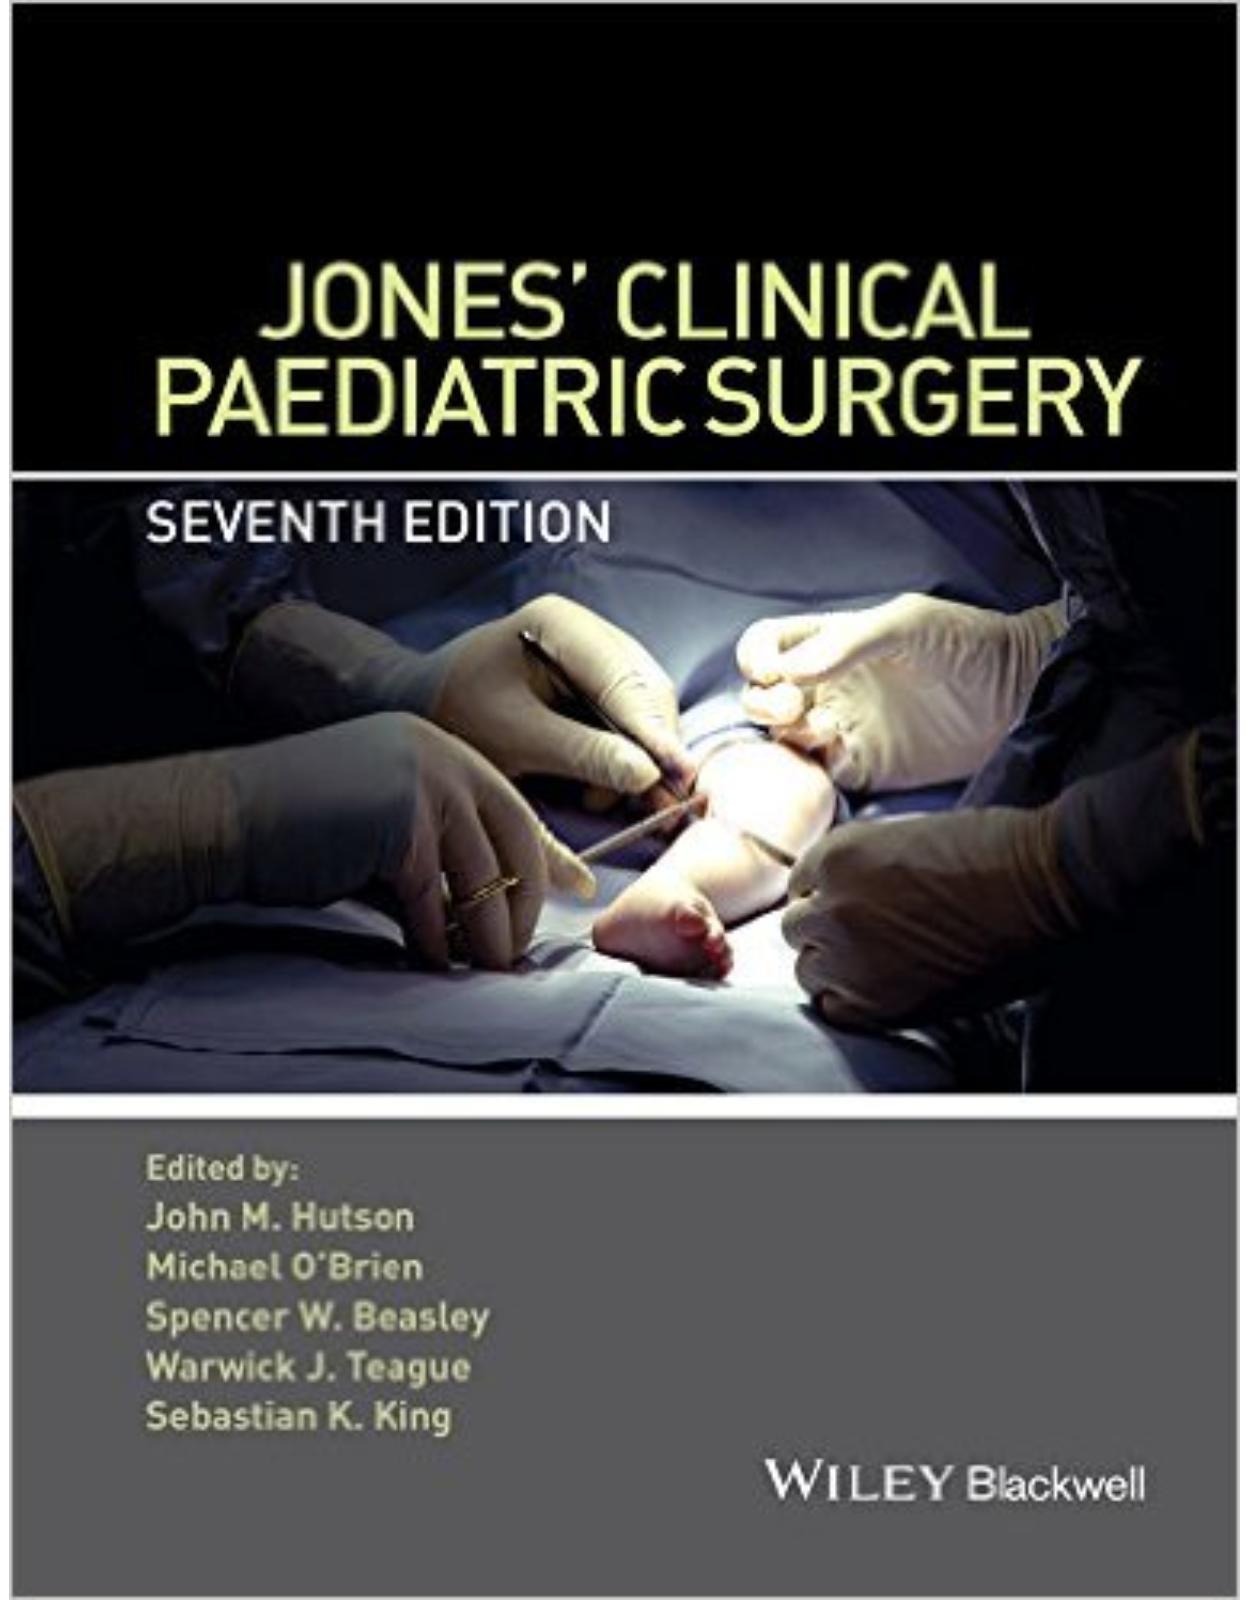 Jones’ Clinical Paediatric Surgery 7th Edition